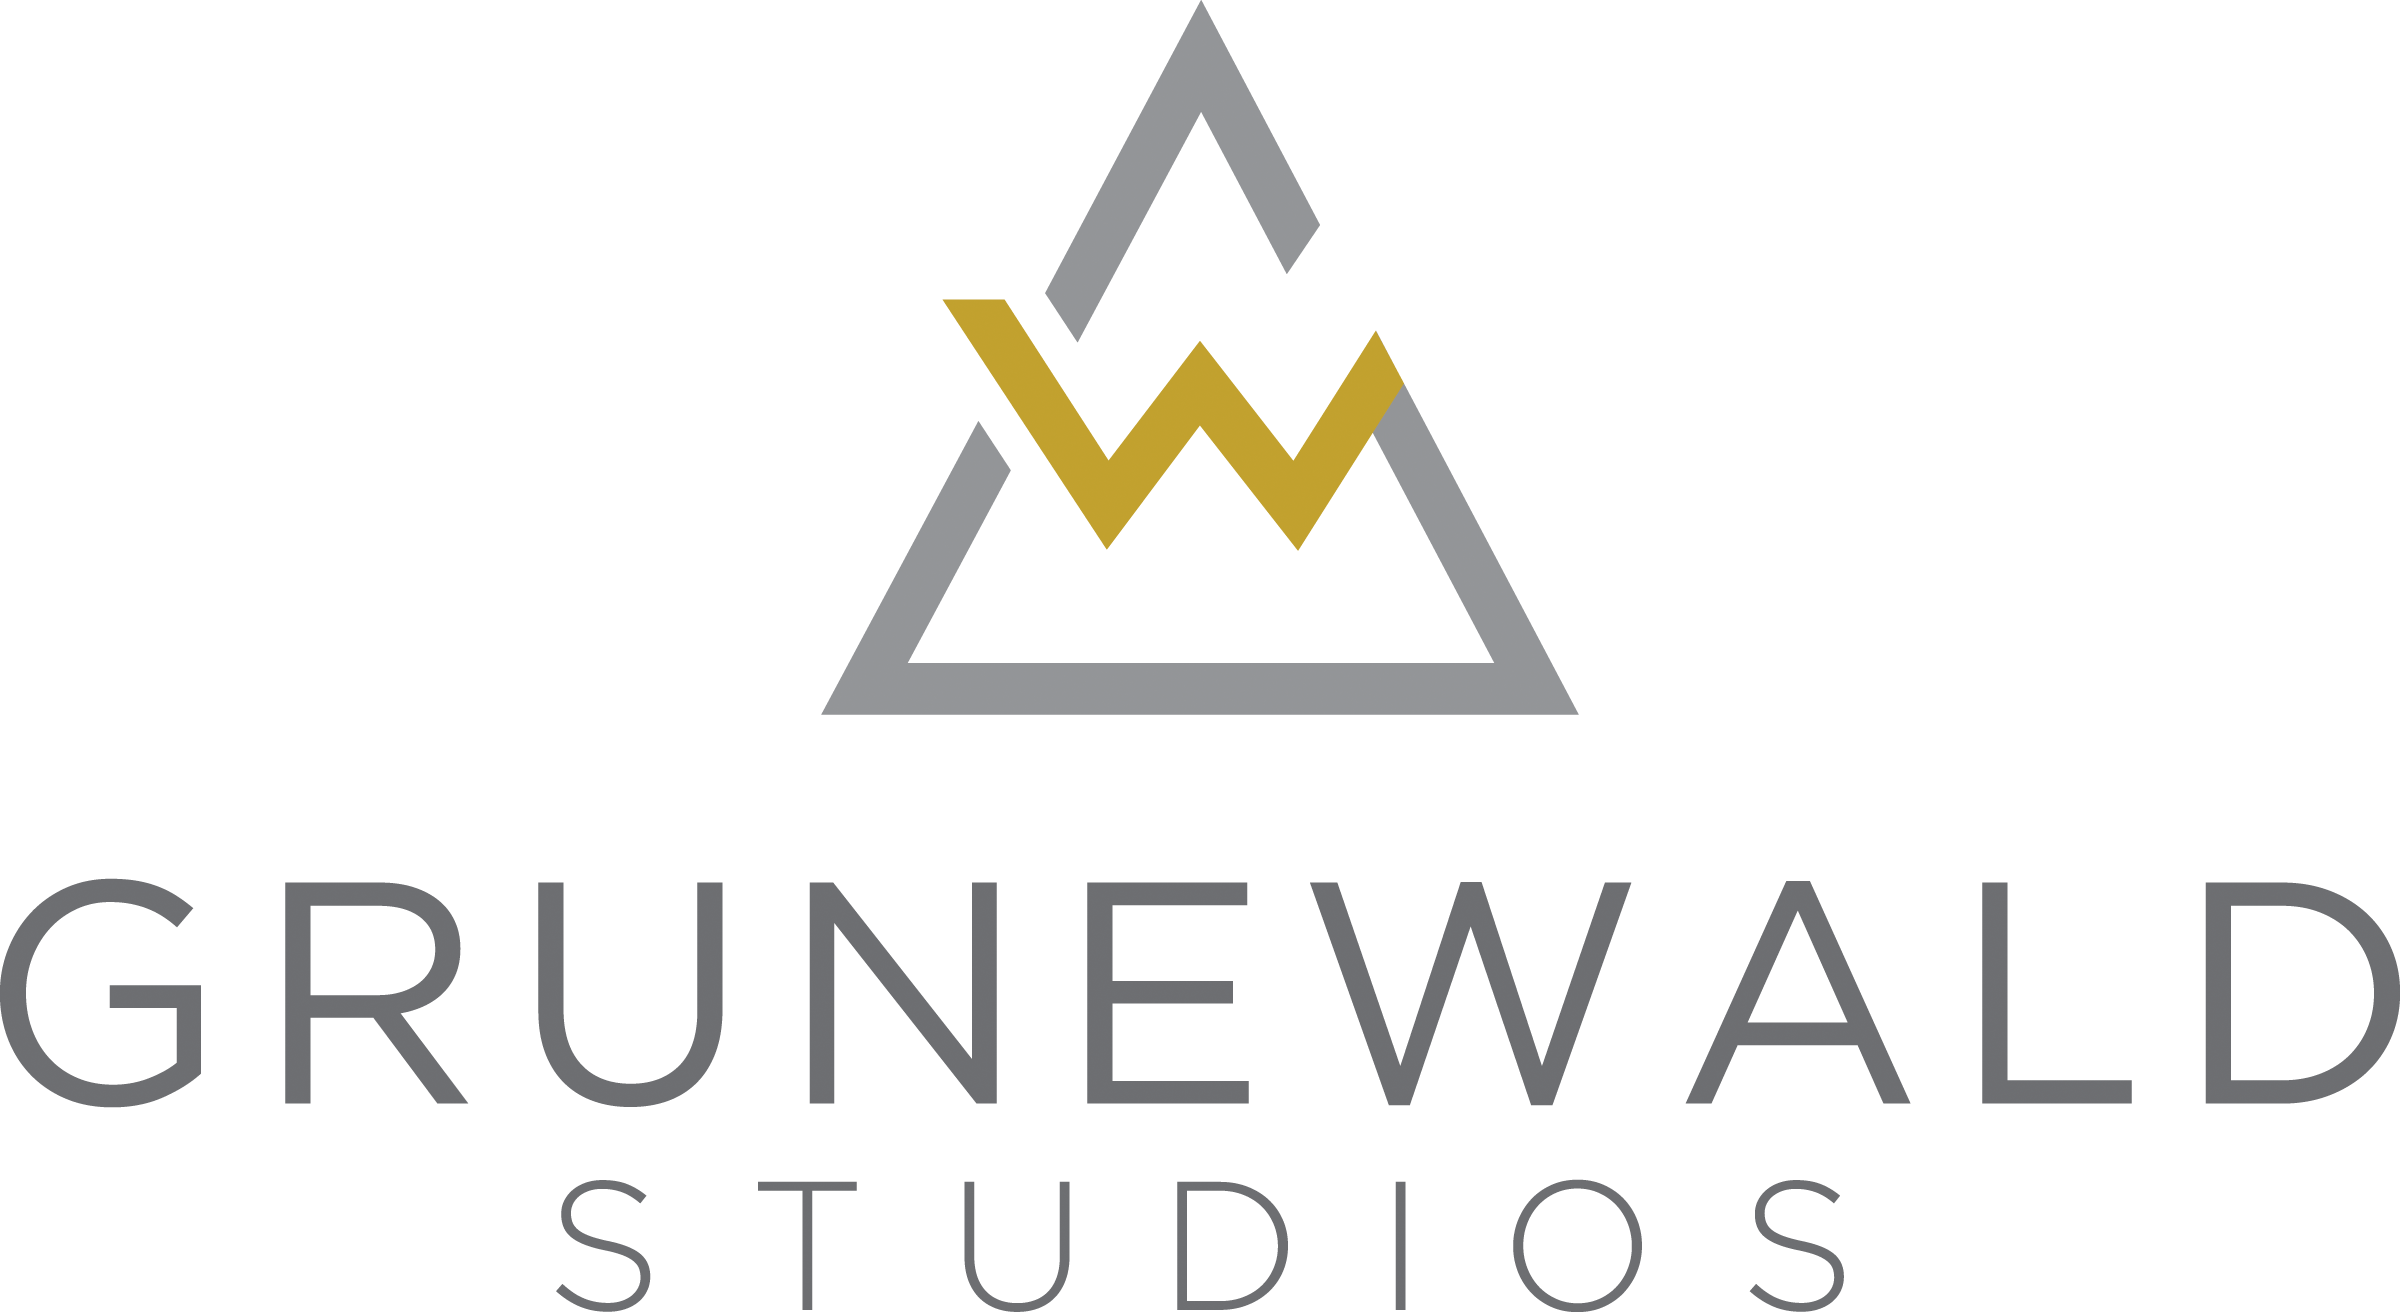 Grunewald Studios